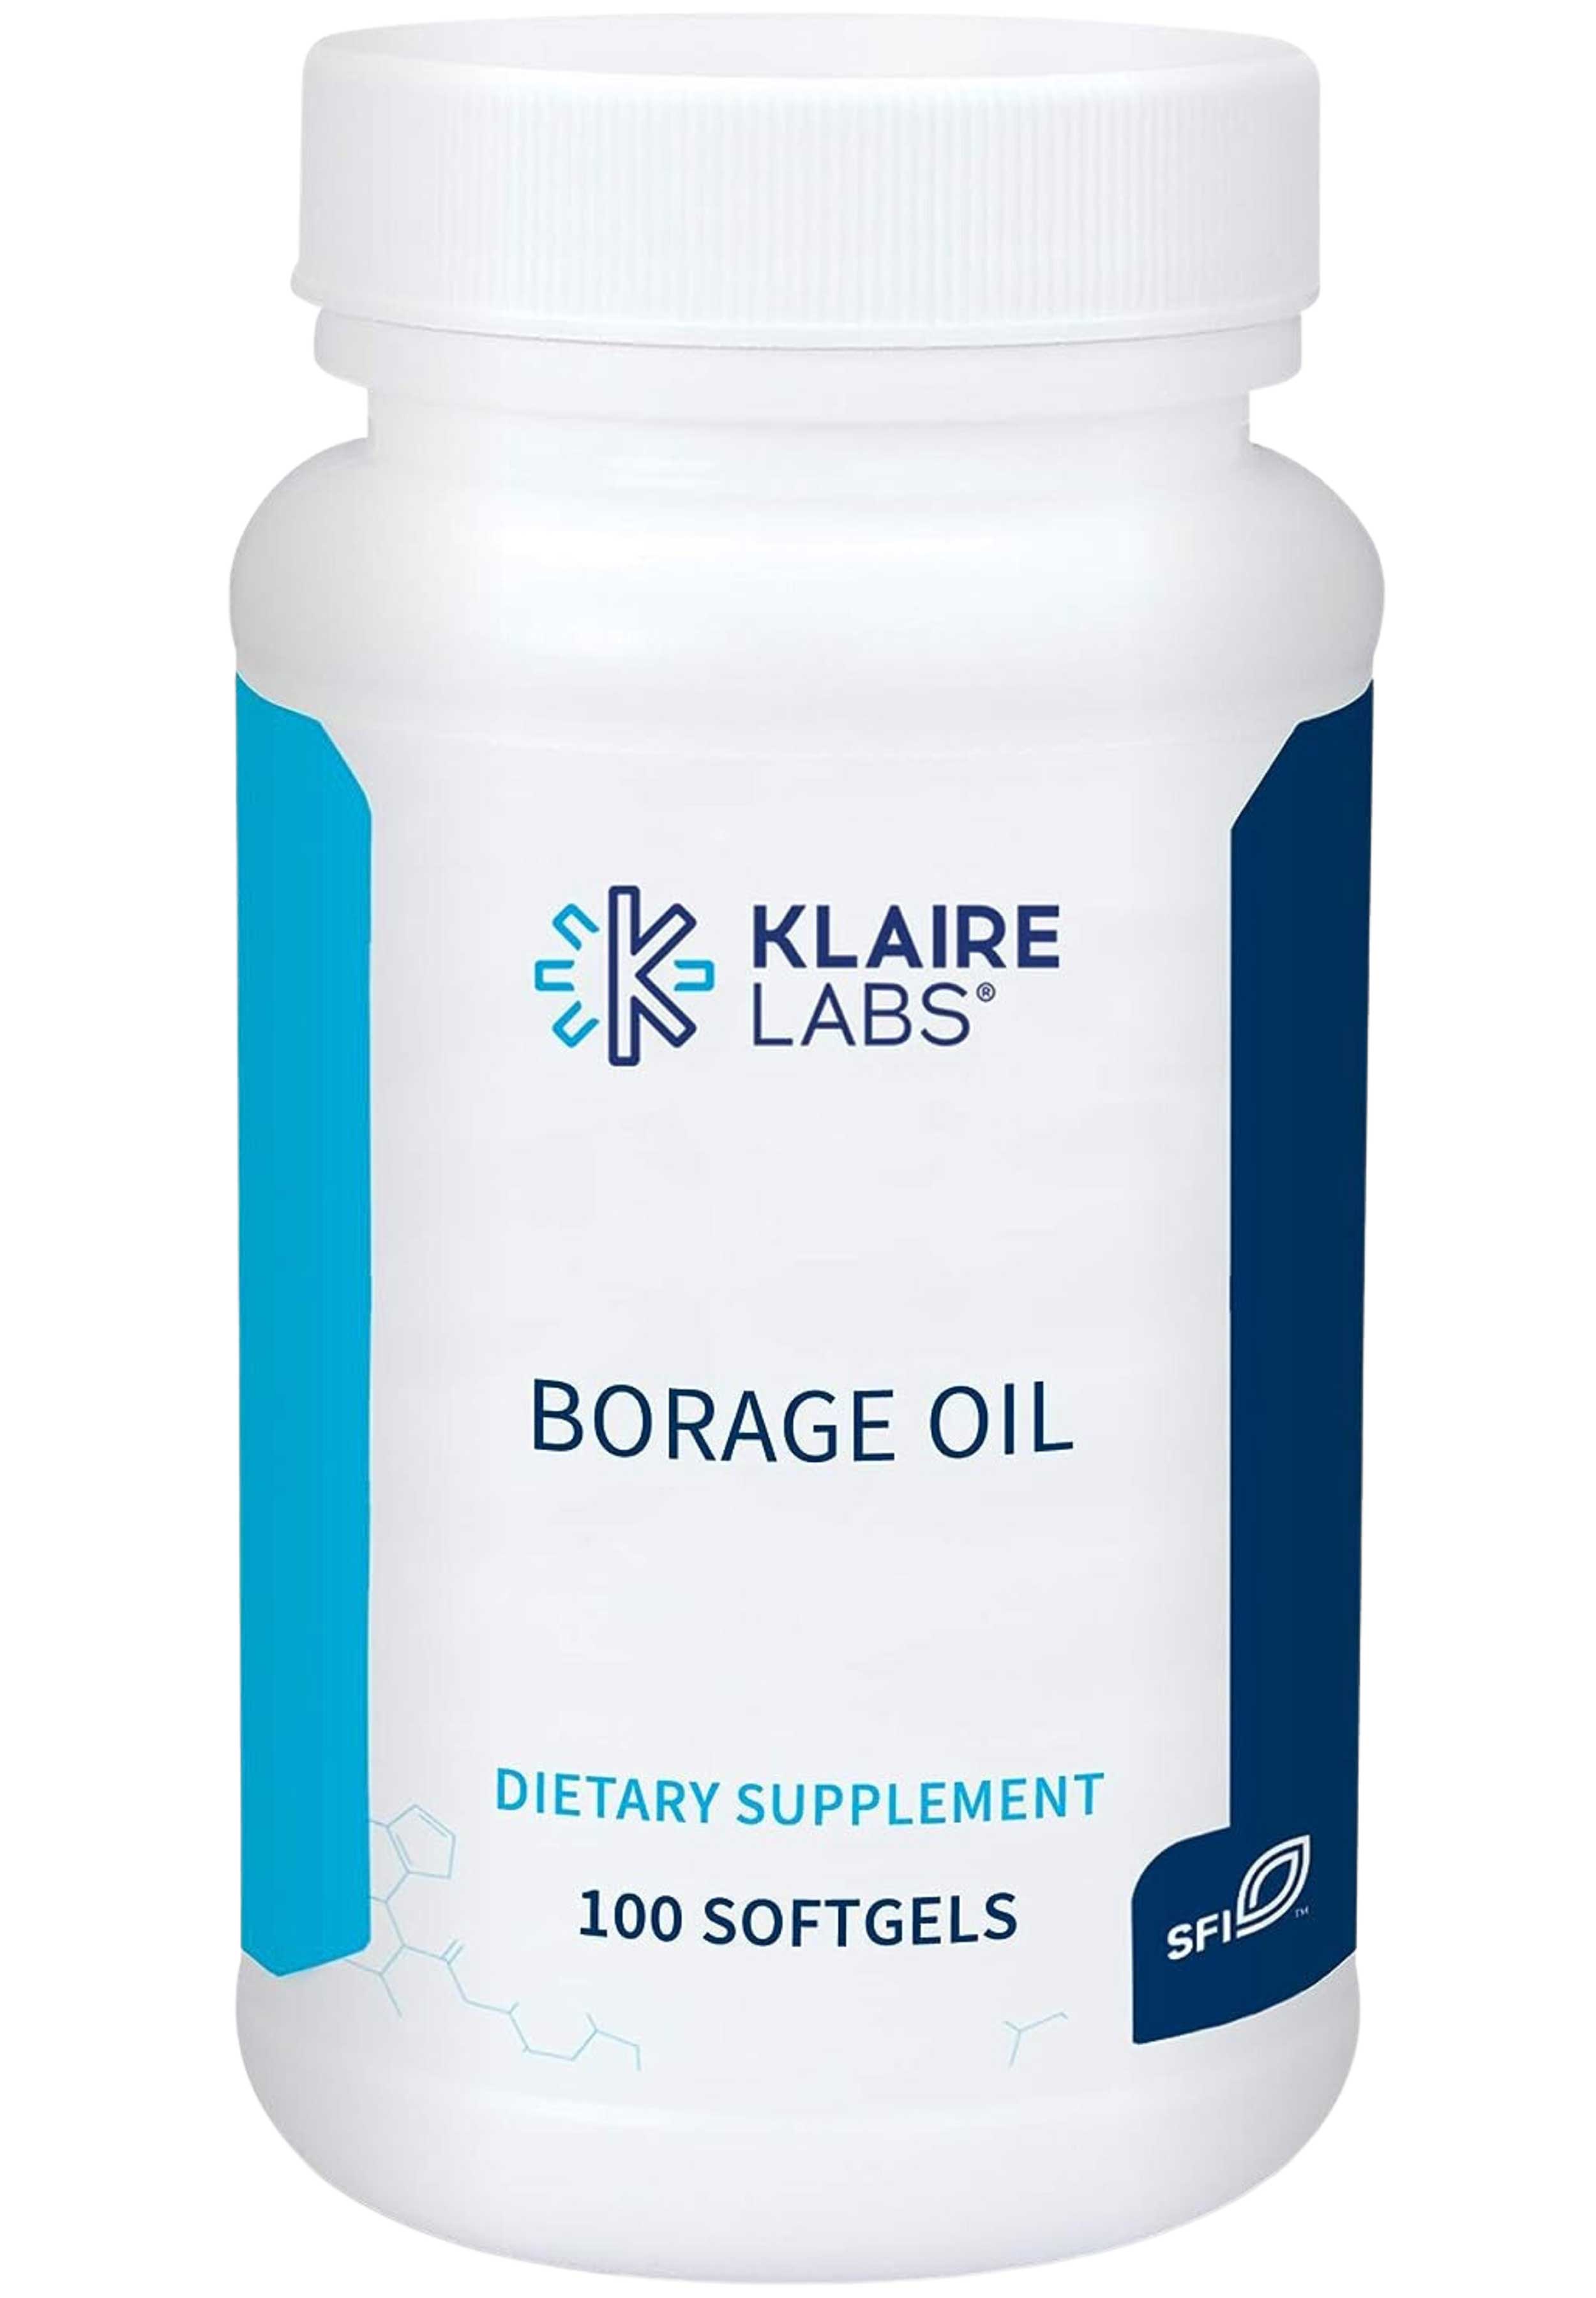 Klaire Labs Borage Oil